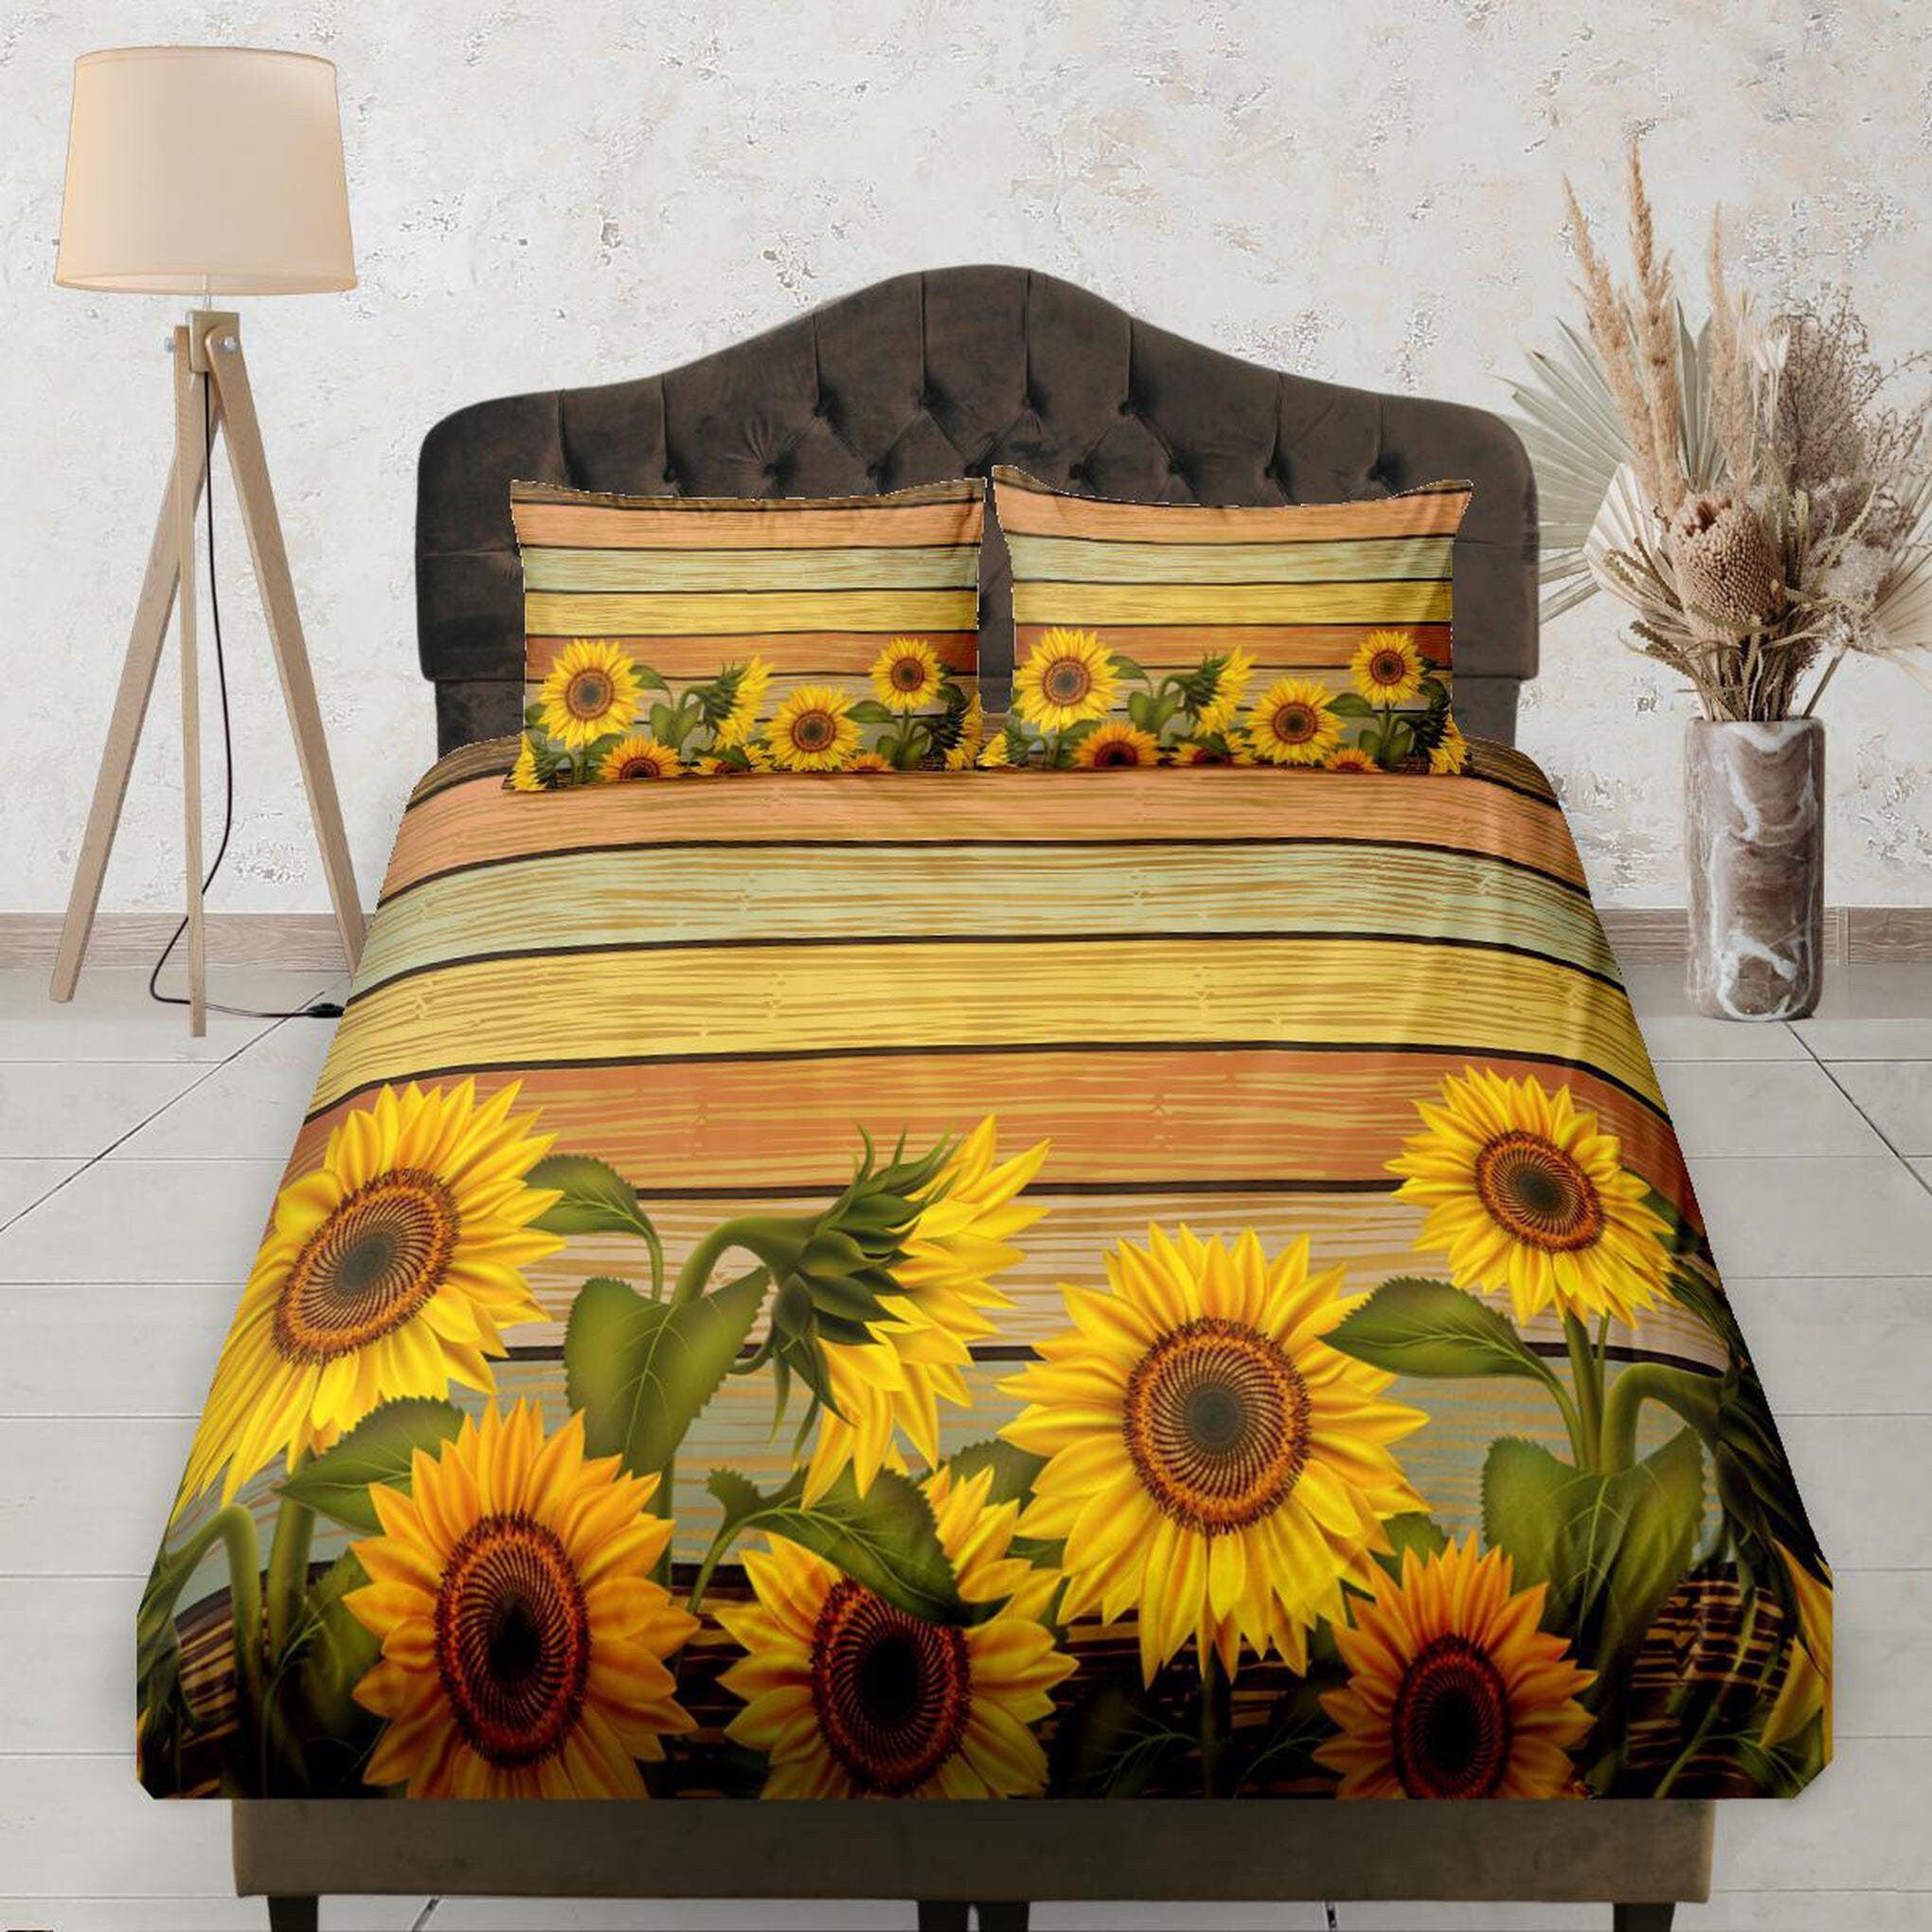 daintyduvet Sunflower on Wood, Fitted Bedsheet Deep Pocket, Floral Prints, Aesthetic Boho Bedding Set Full, Dorm Bedding, Crib Sheet, King, Queen, Twin